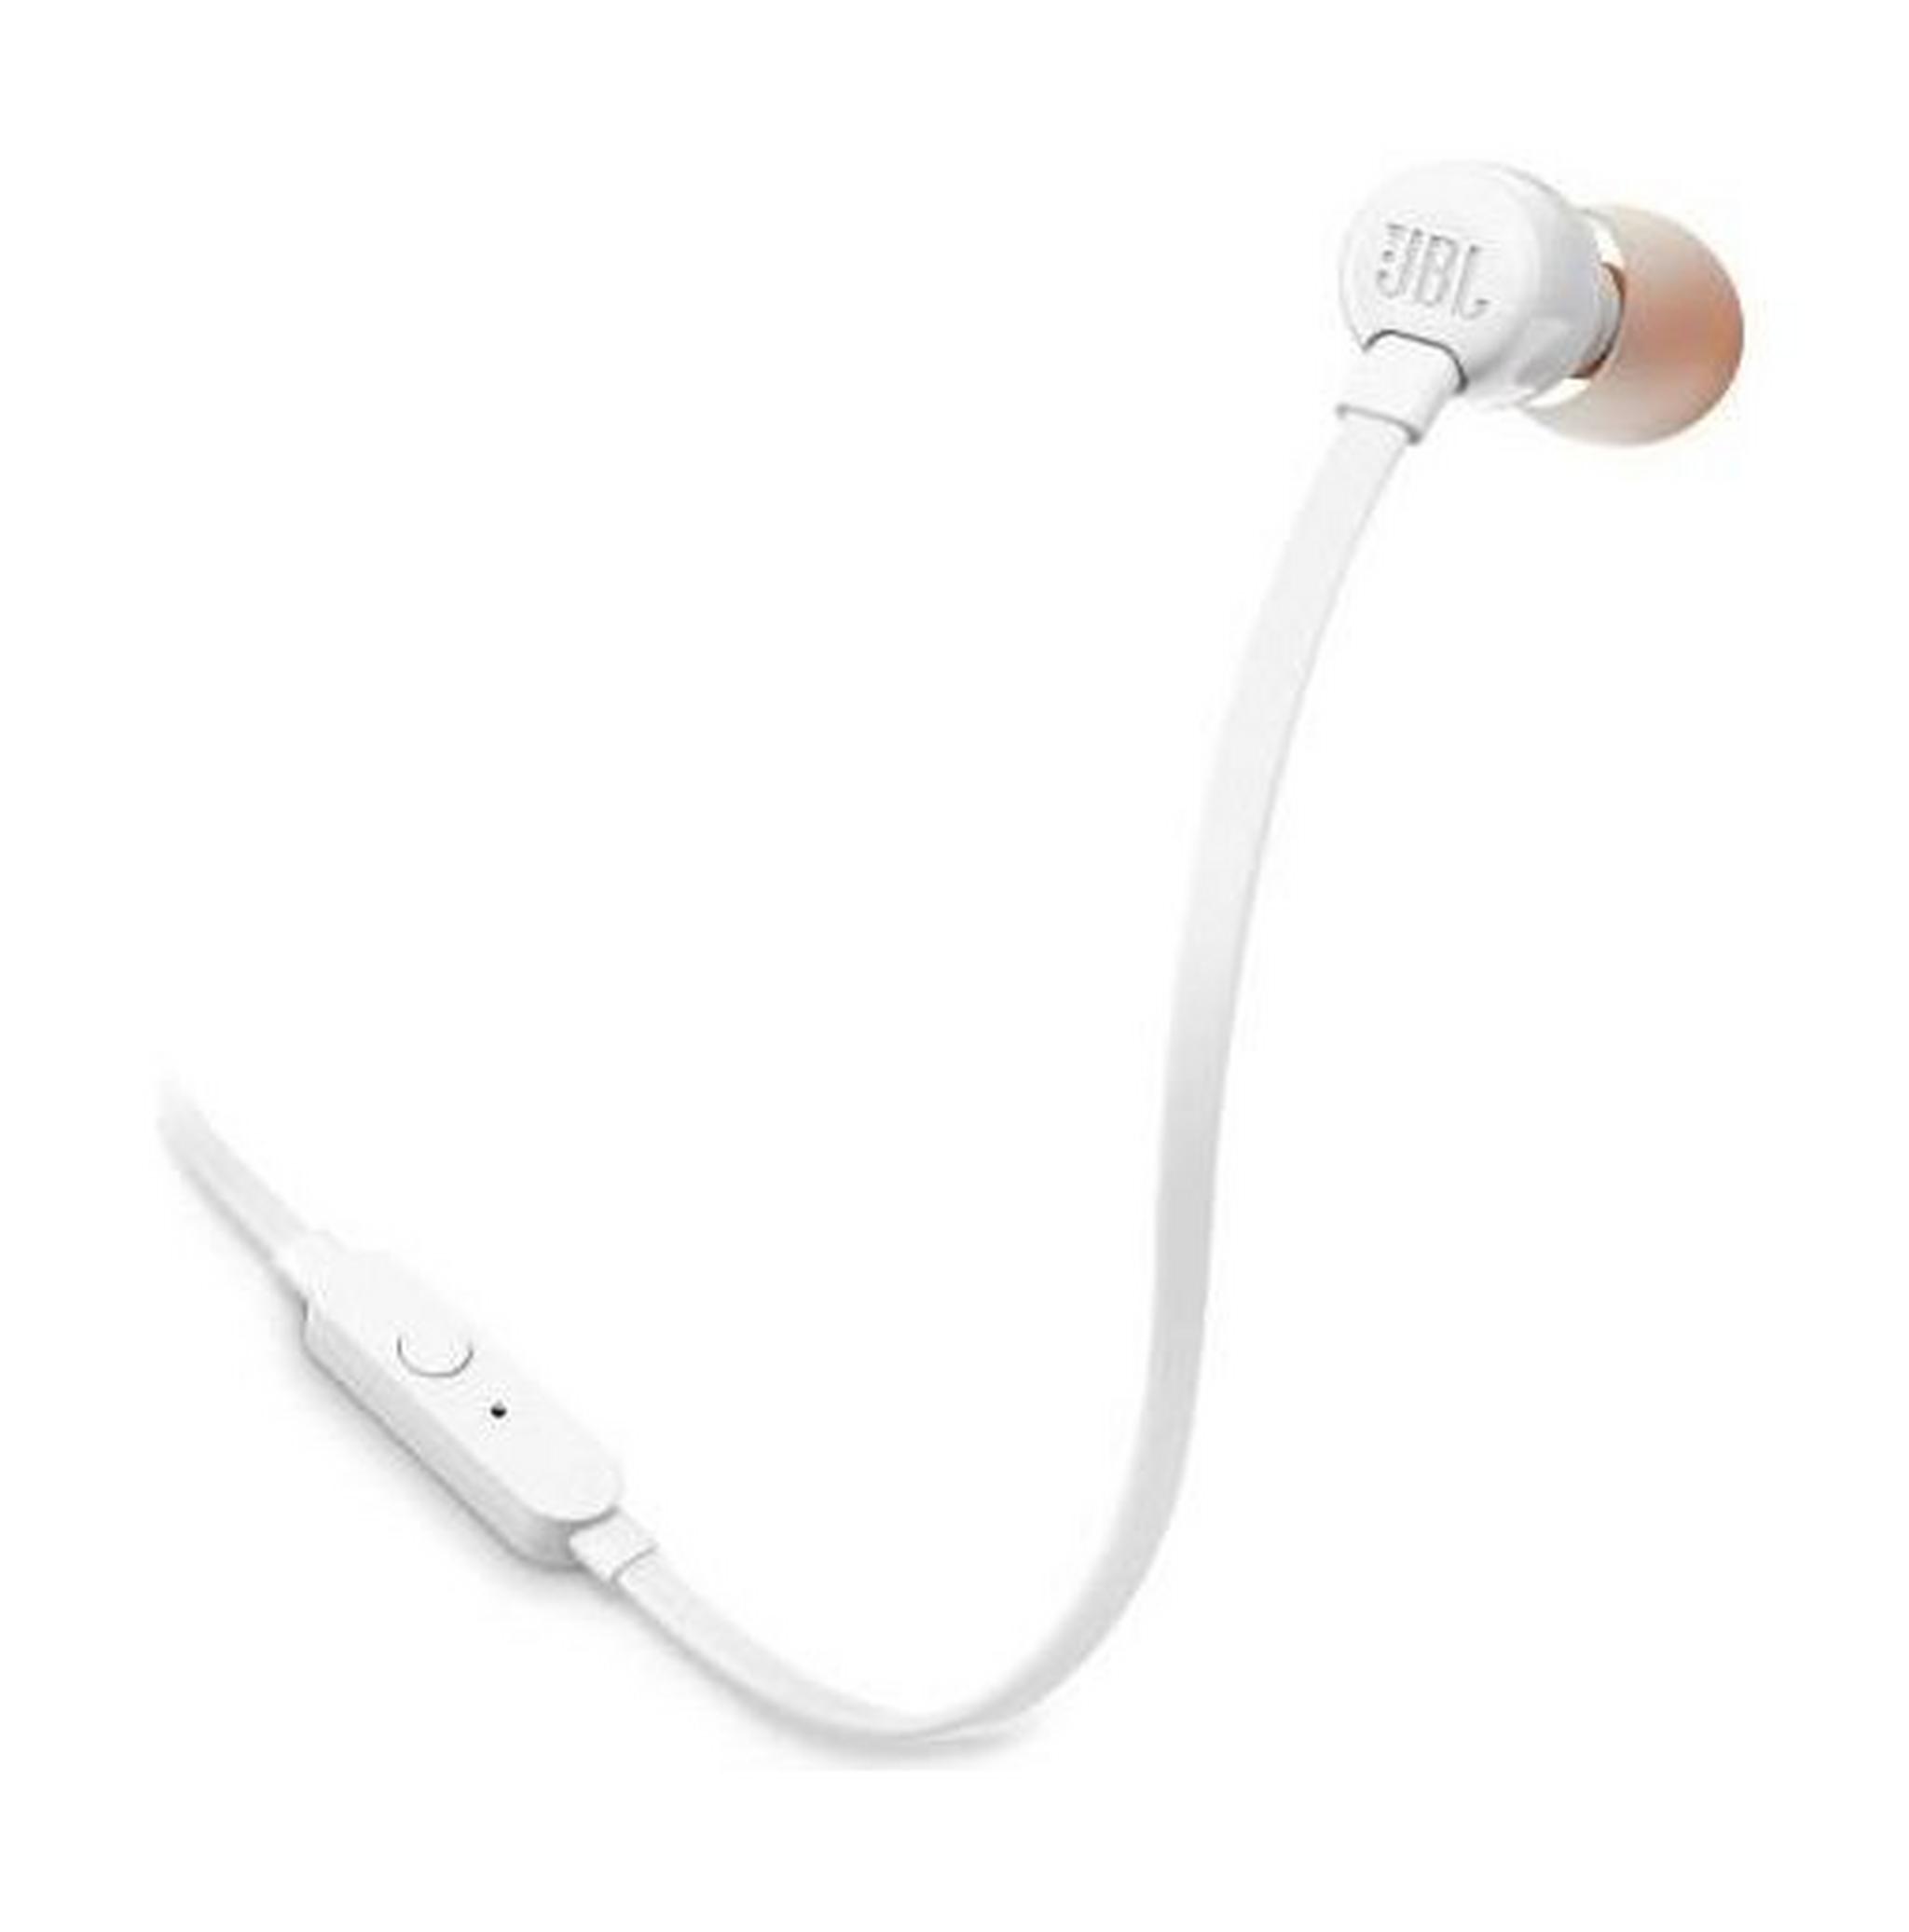 JBL T110 In-Ear Wired Earphone with Mic - White